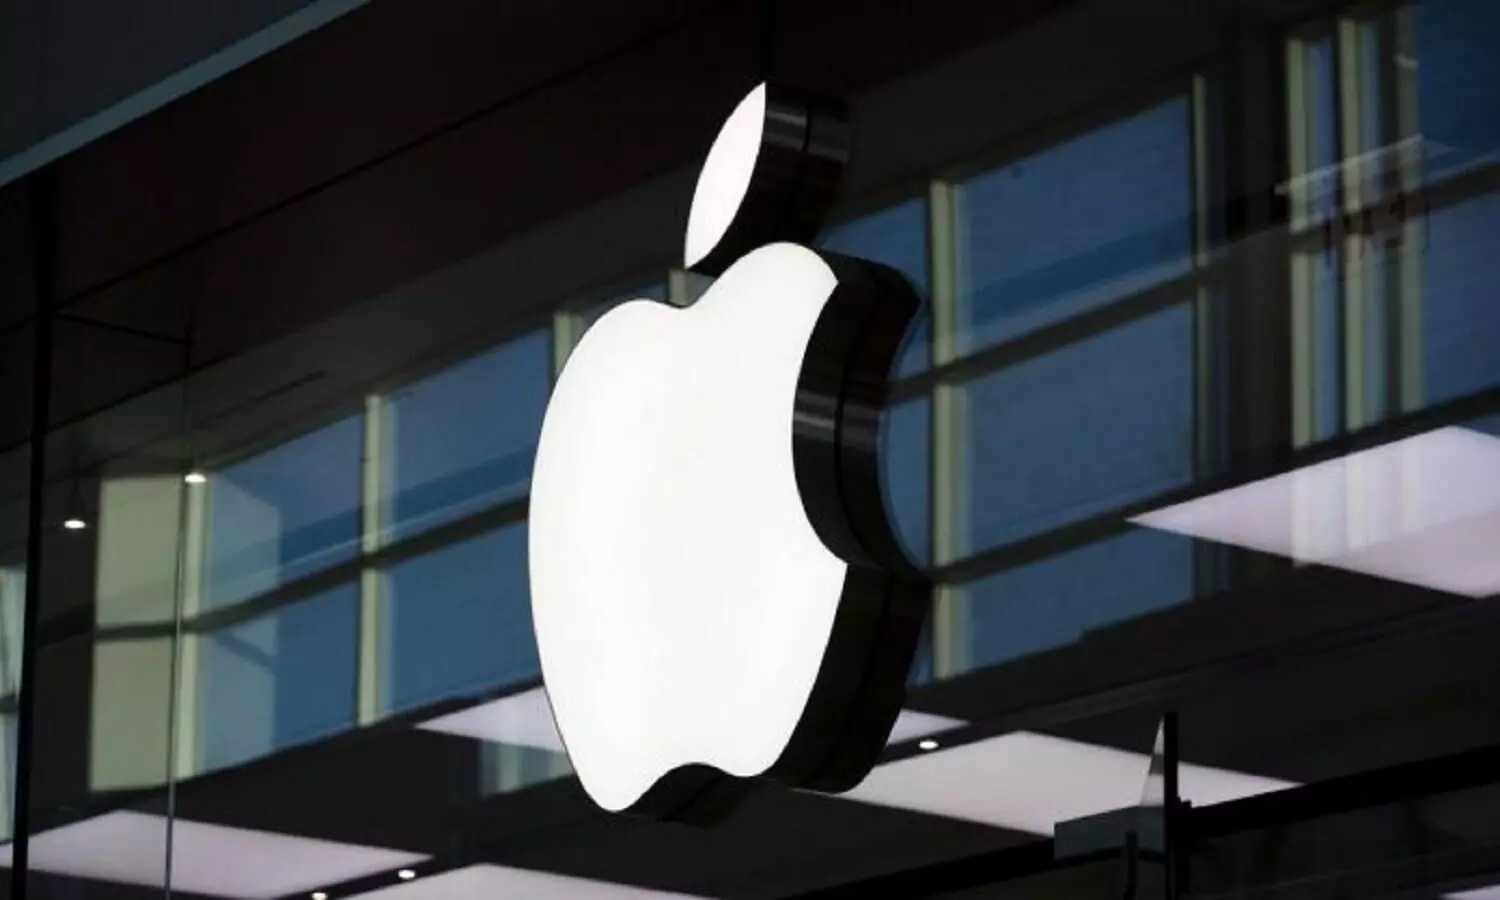 एप्पल ने यूजर्स से कहा तुरंत इंस्टाल करें नया ऑपरेटिंग सिस्टम